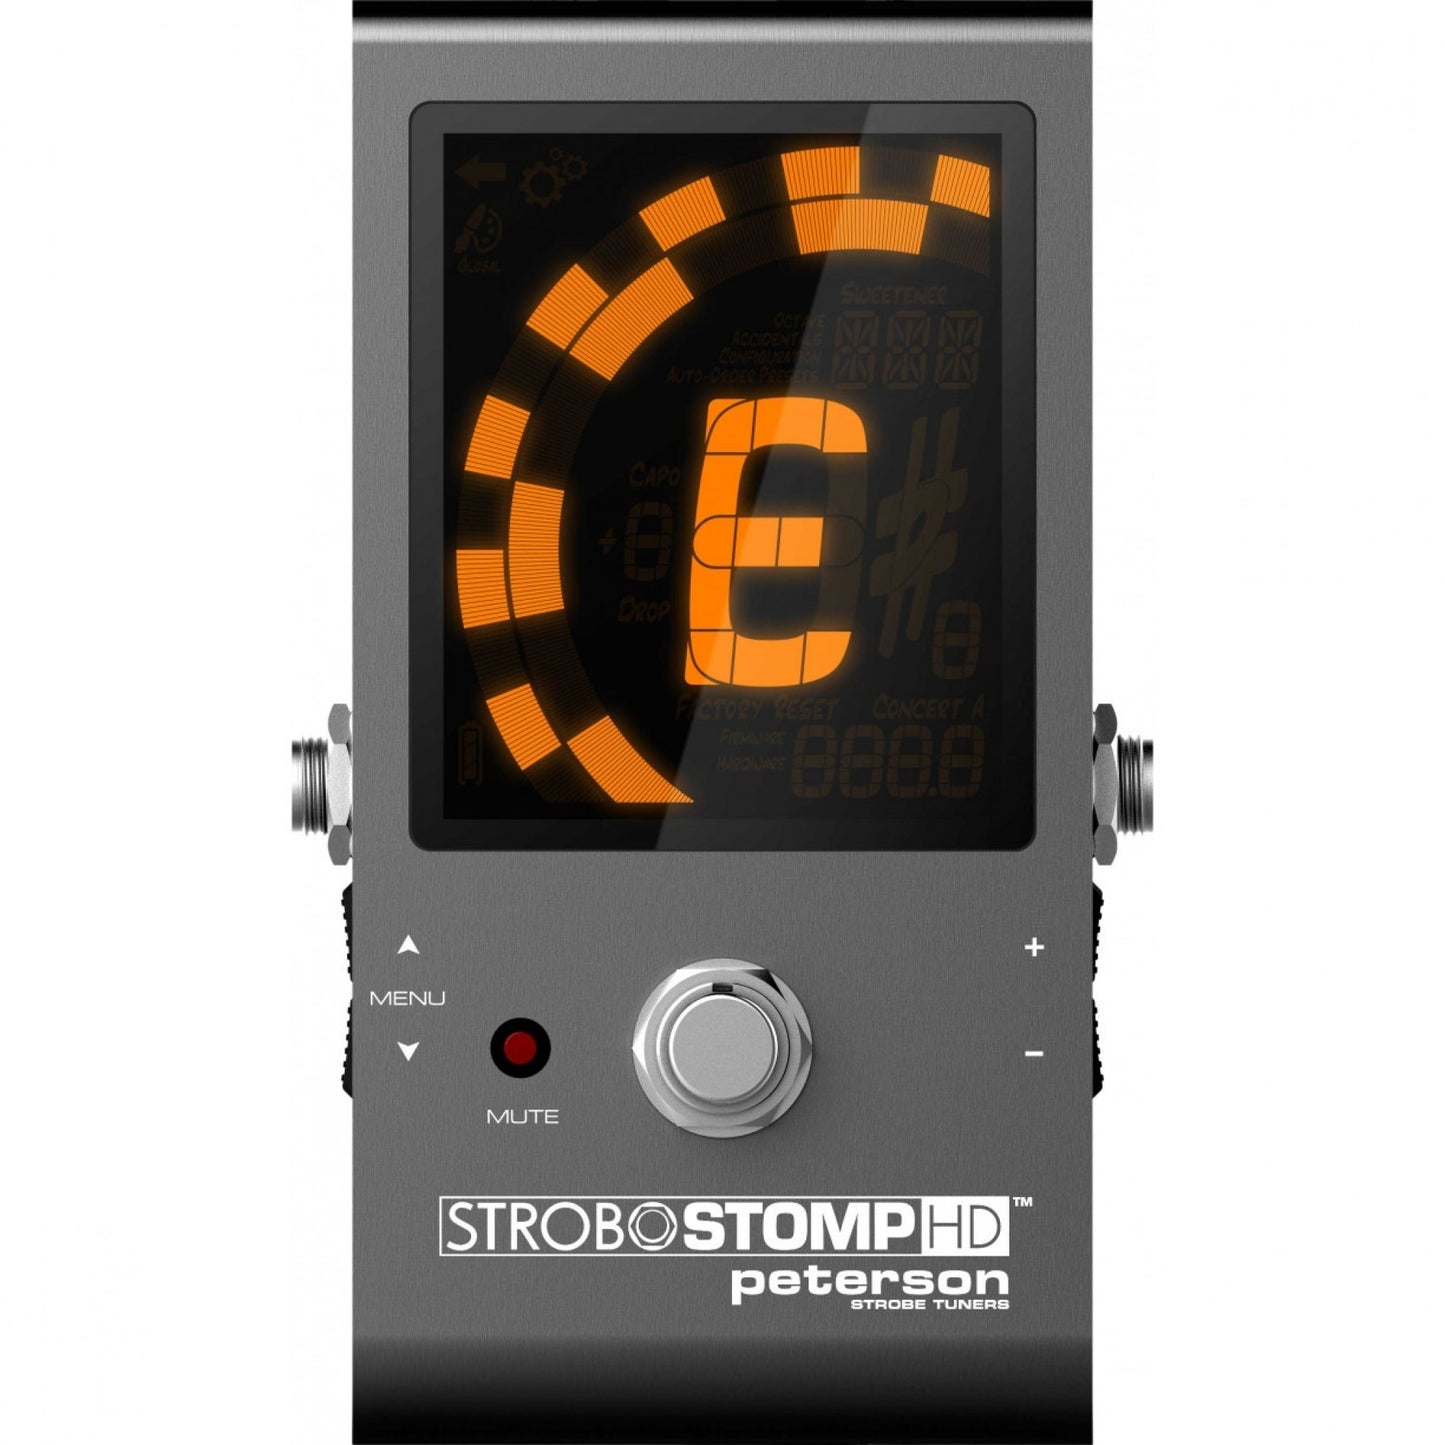 Peterson Strobostomp HD - Floor Tuner Pedal